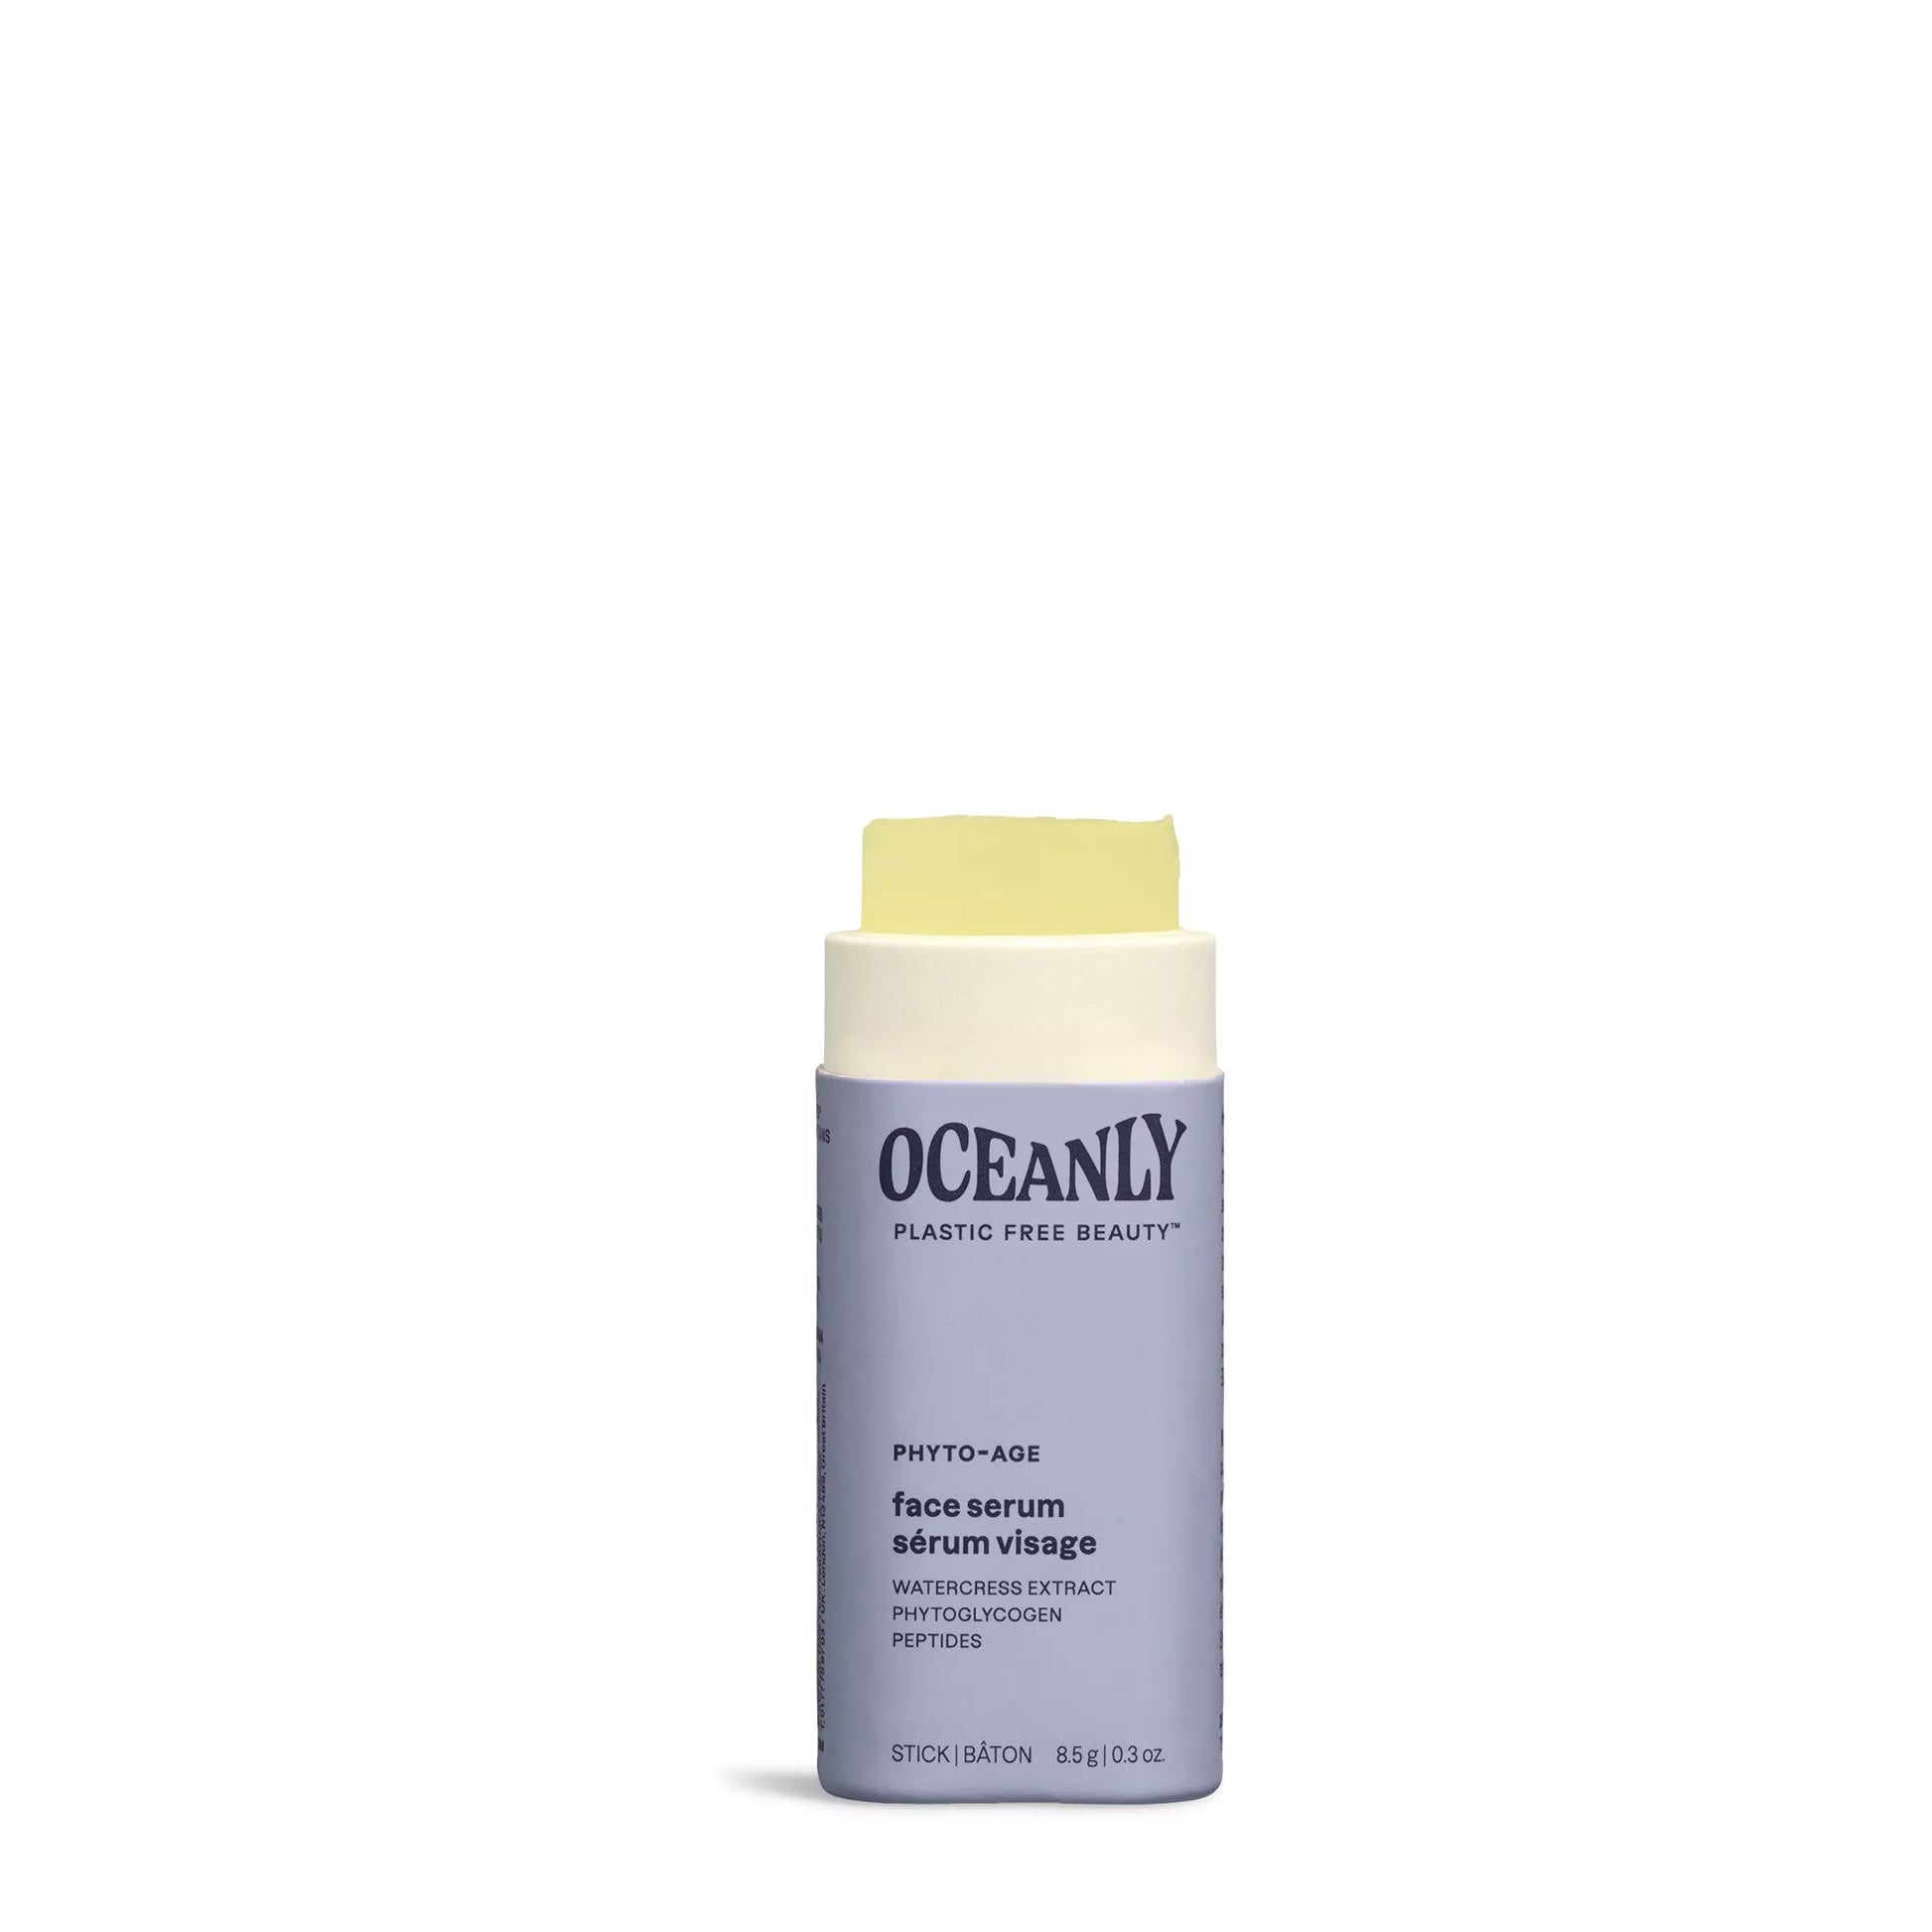    ATTITUDE oceanly phyto-age serum visage 16081_fr? 8.5g Sans odeur